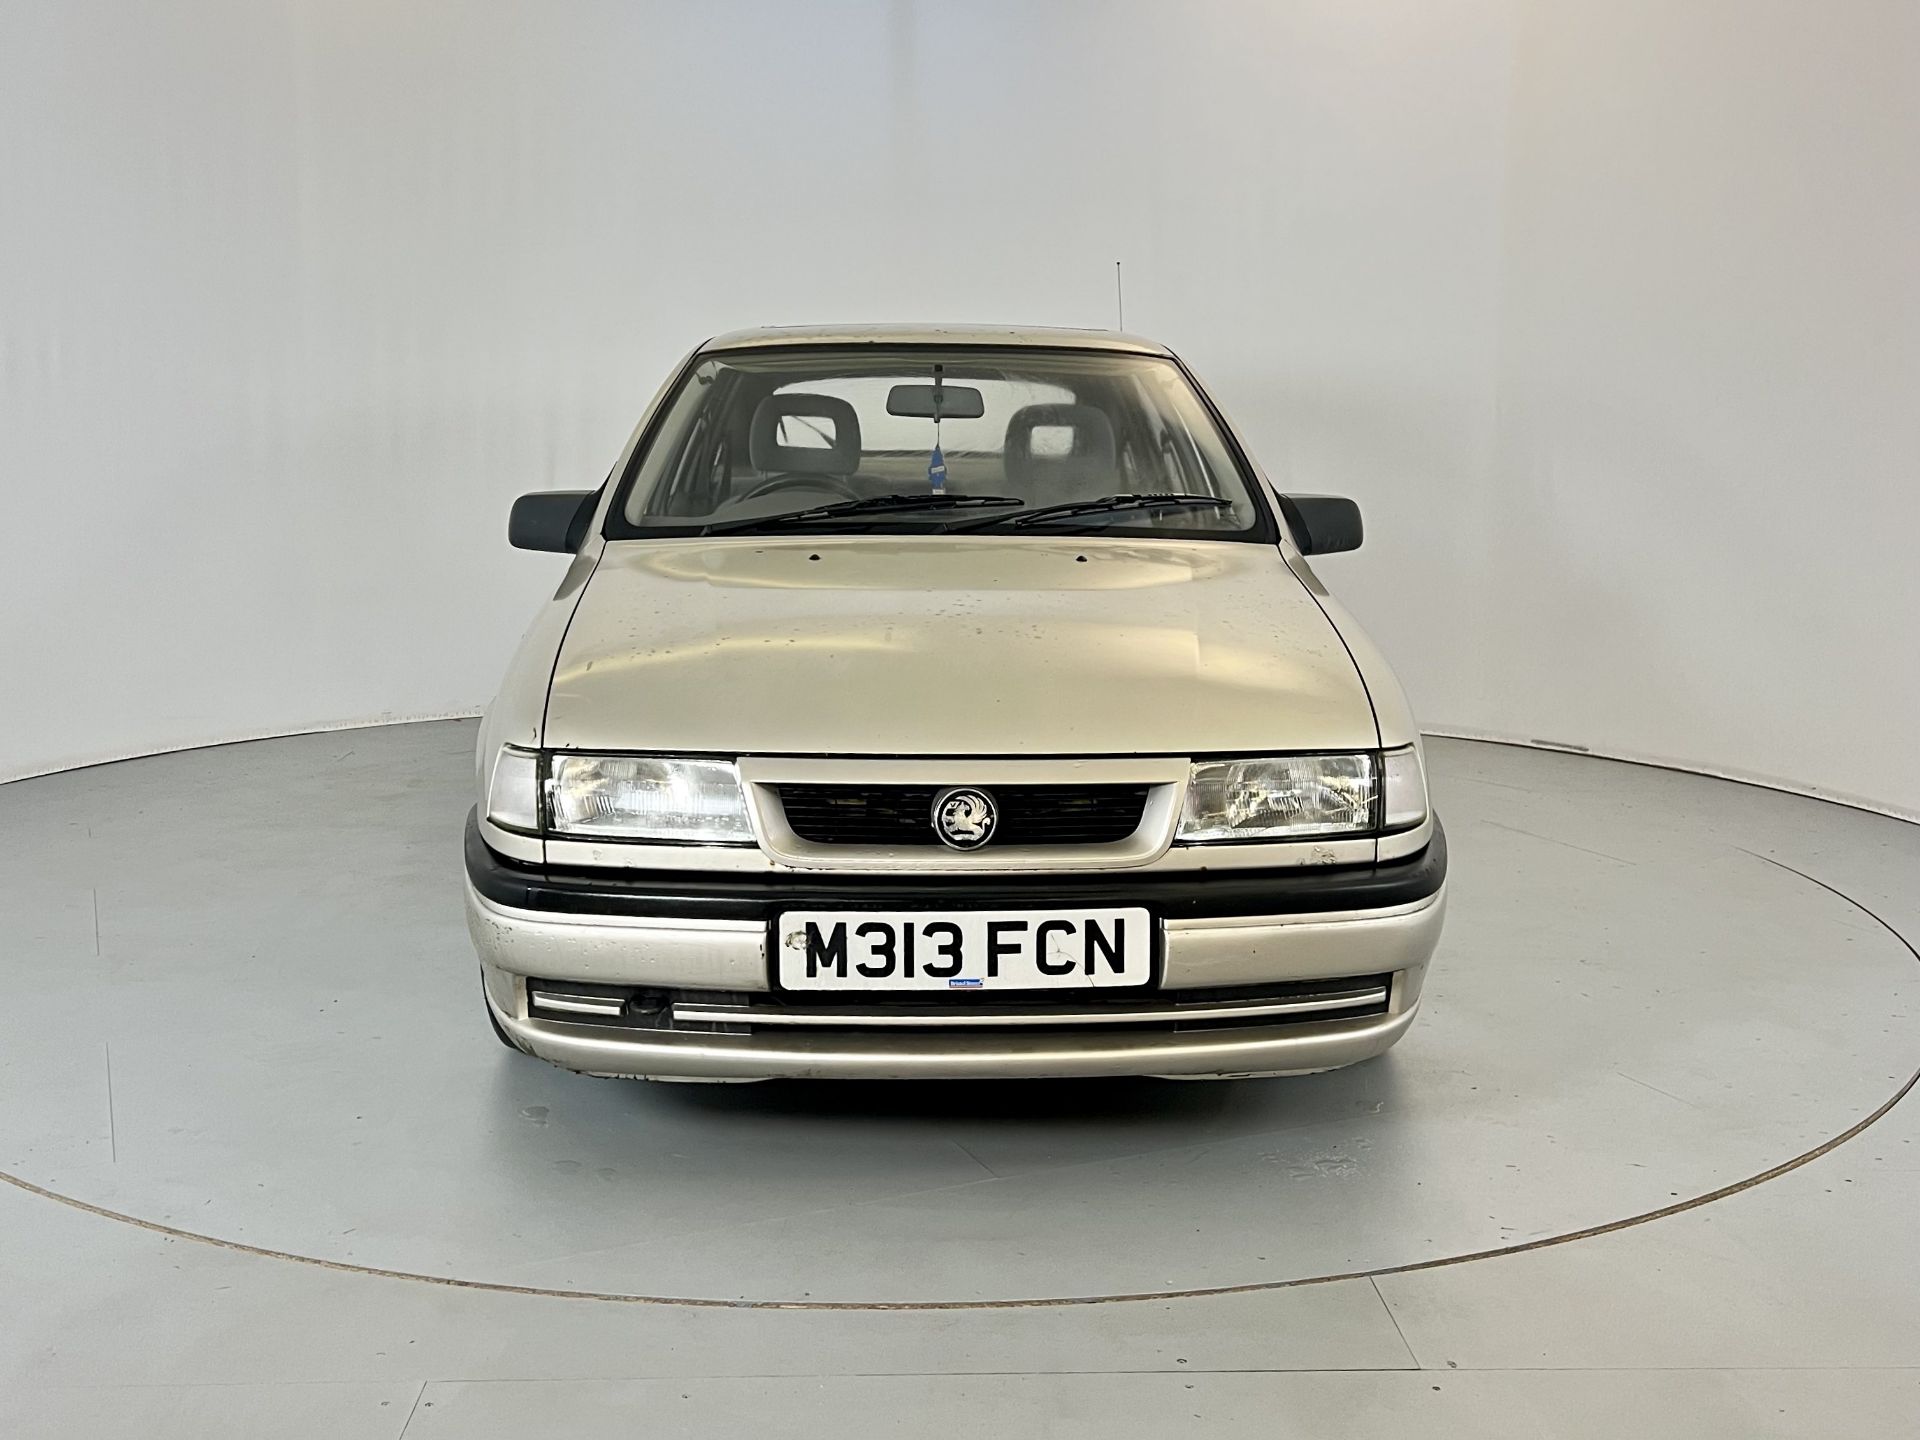 Vauxhall Cavalier - Image 2 of 33